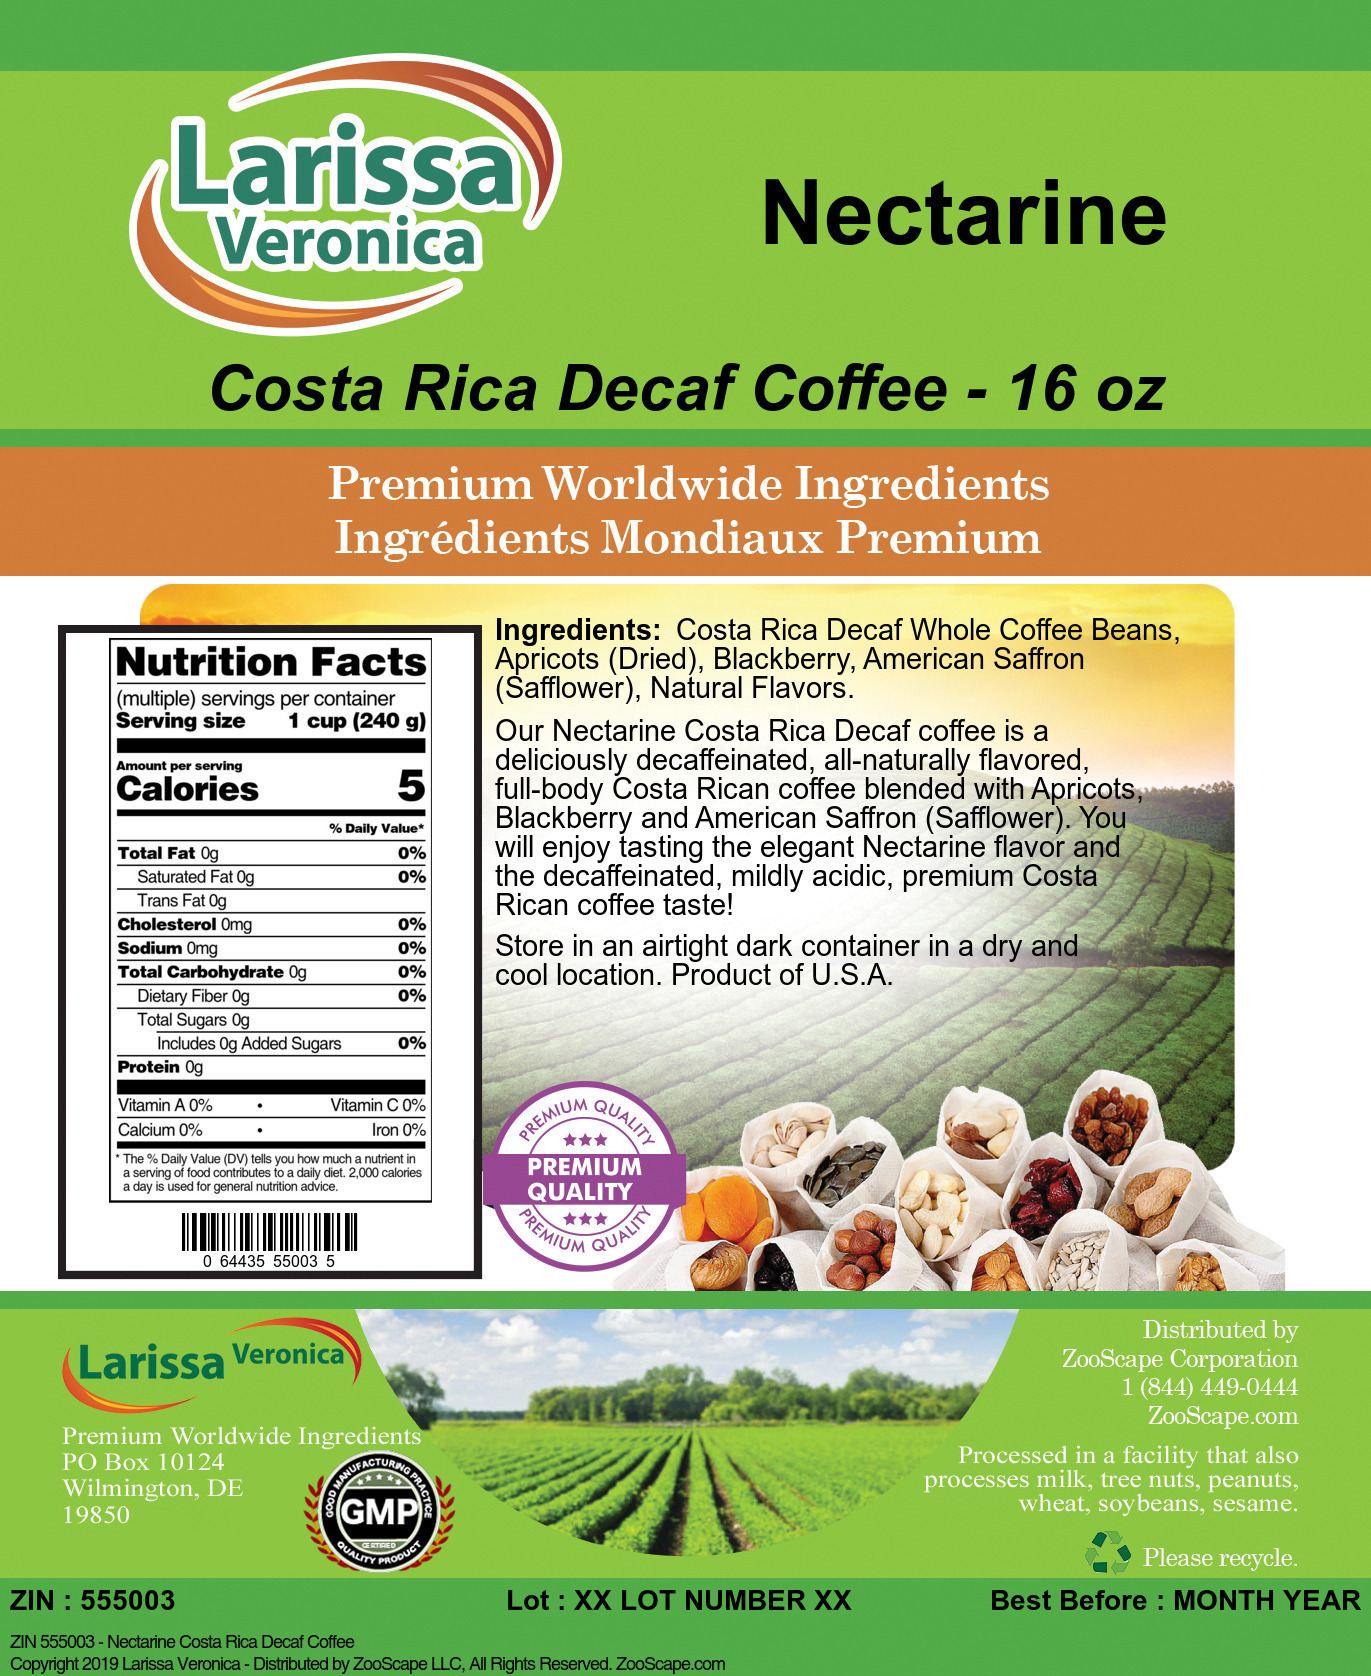 Nectarine Costa Rica Decaf Coffee - Label